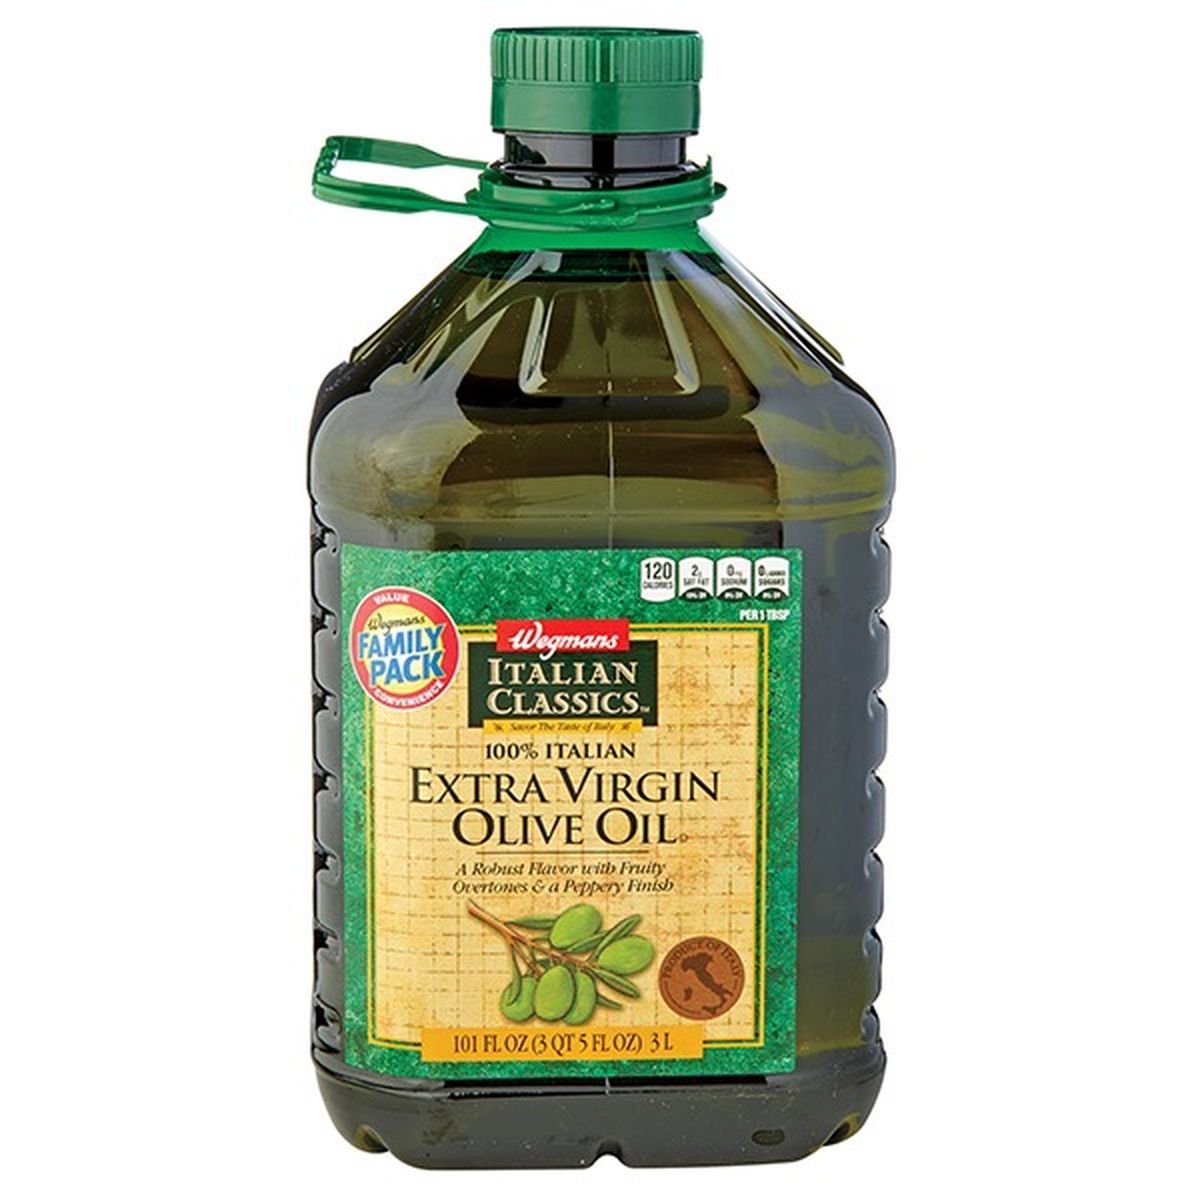 Calories in Wegmans Italian Classics Italian Extra Virgin Olive Oil, FAMILY PACK